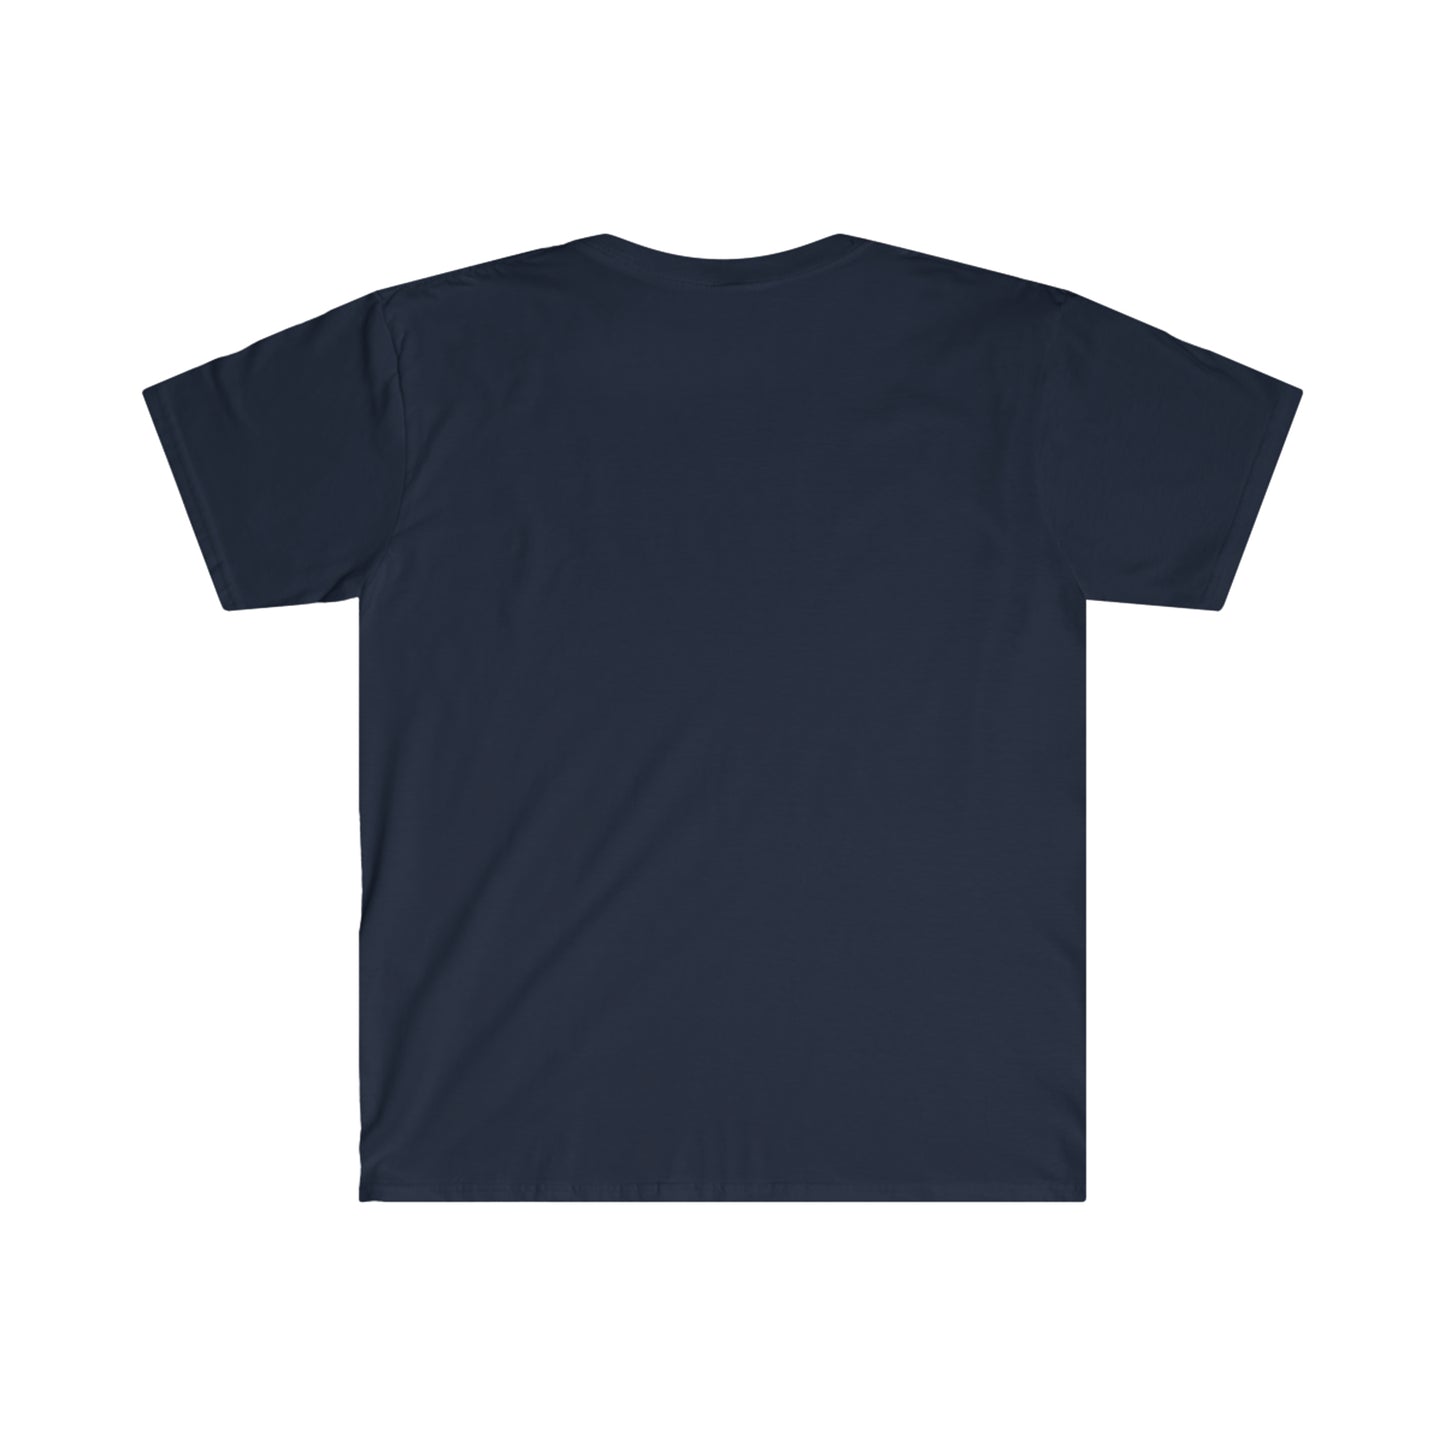 Unisex Vibes Speak T-Shirt